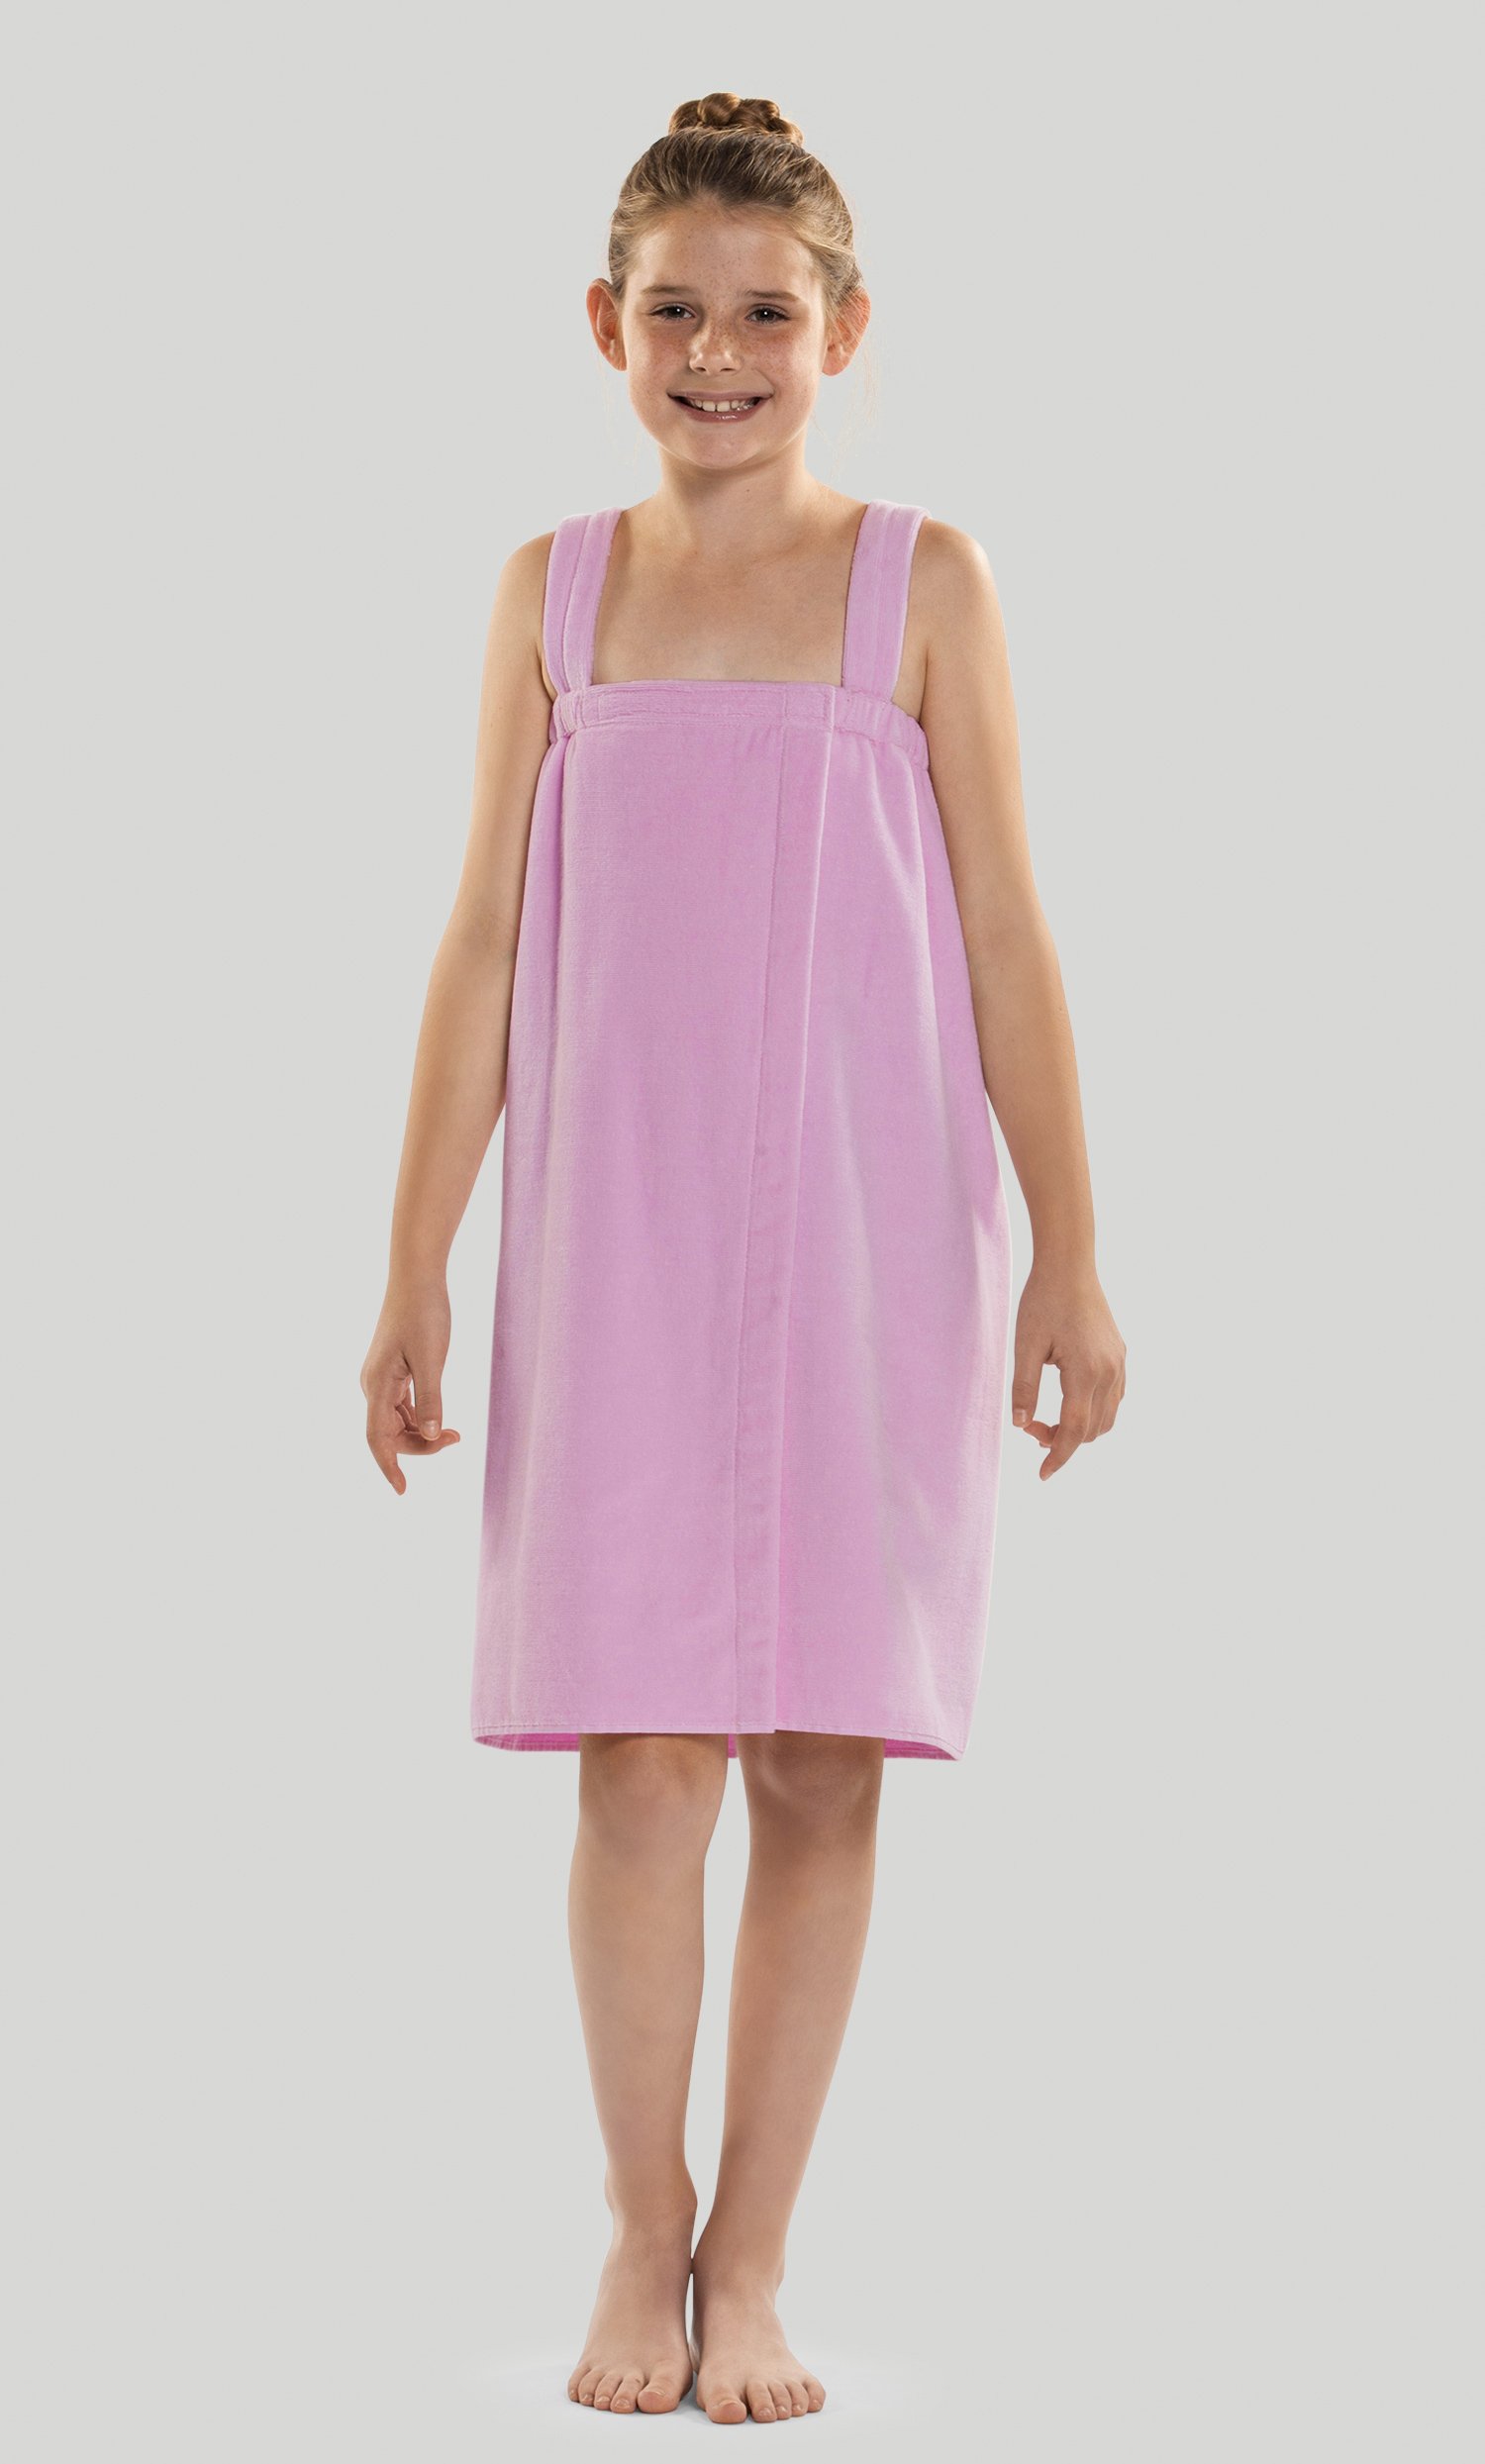 100% Cotton Pink Terry Velour Cloth Kid's Spa/Pool Wrap, Bath Towel Wrap-Robemart.com